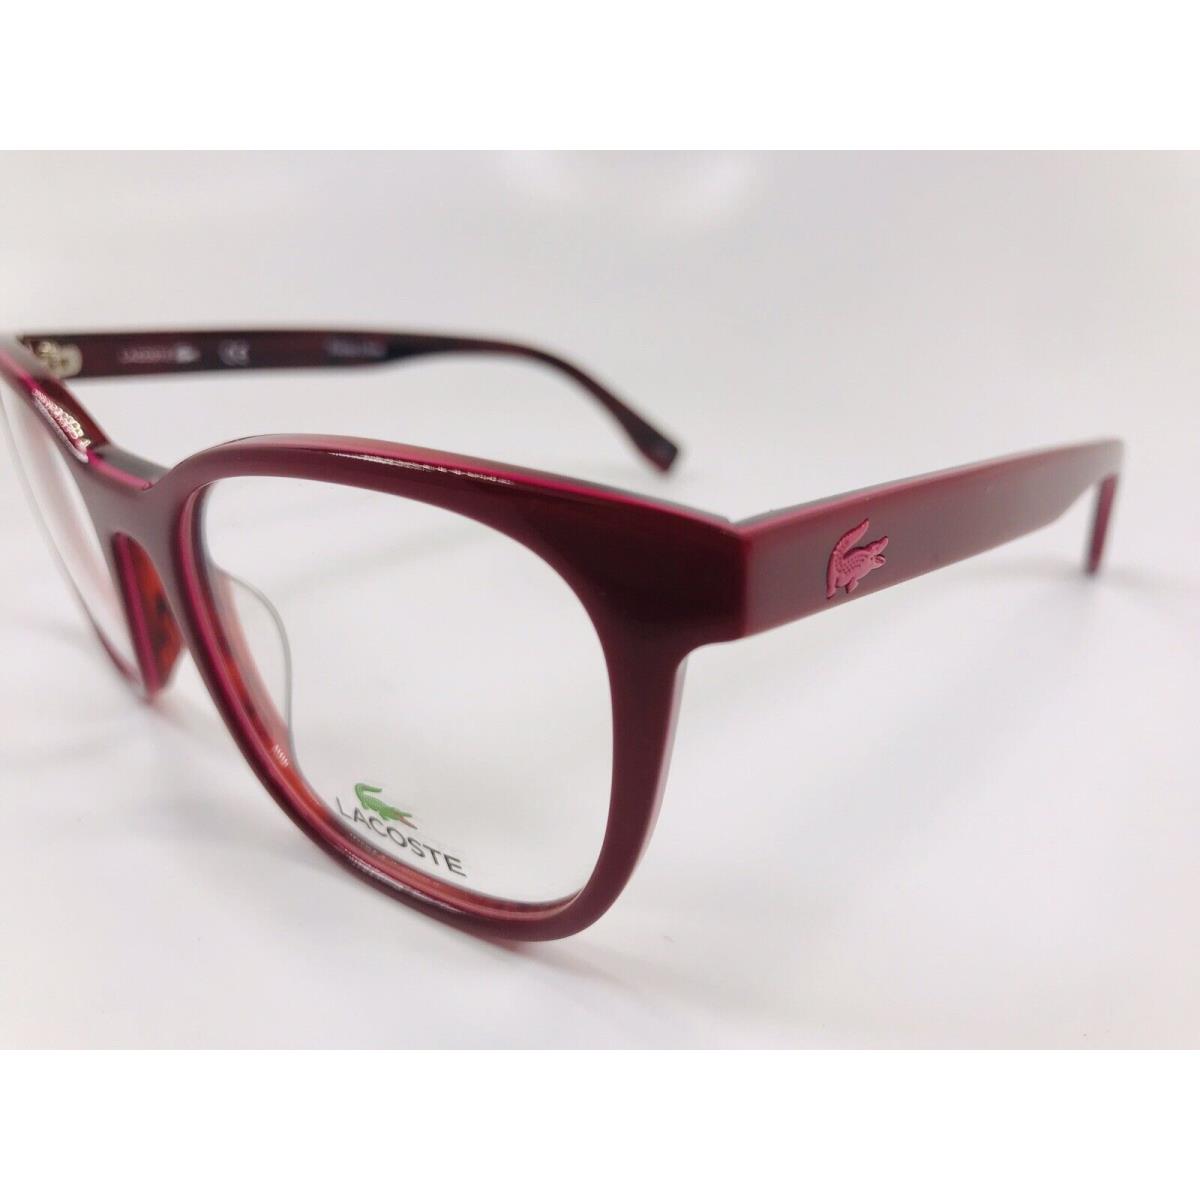 Lacoste eyeglasses  - 615 , Red Frame 2